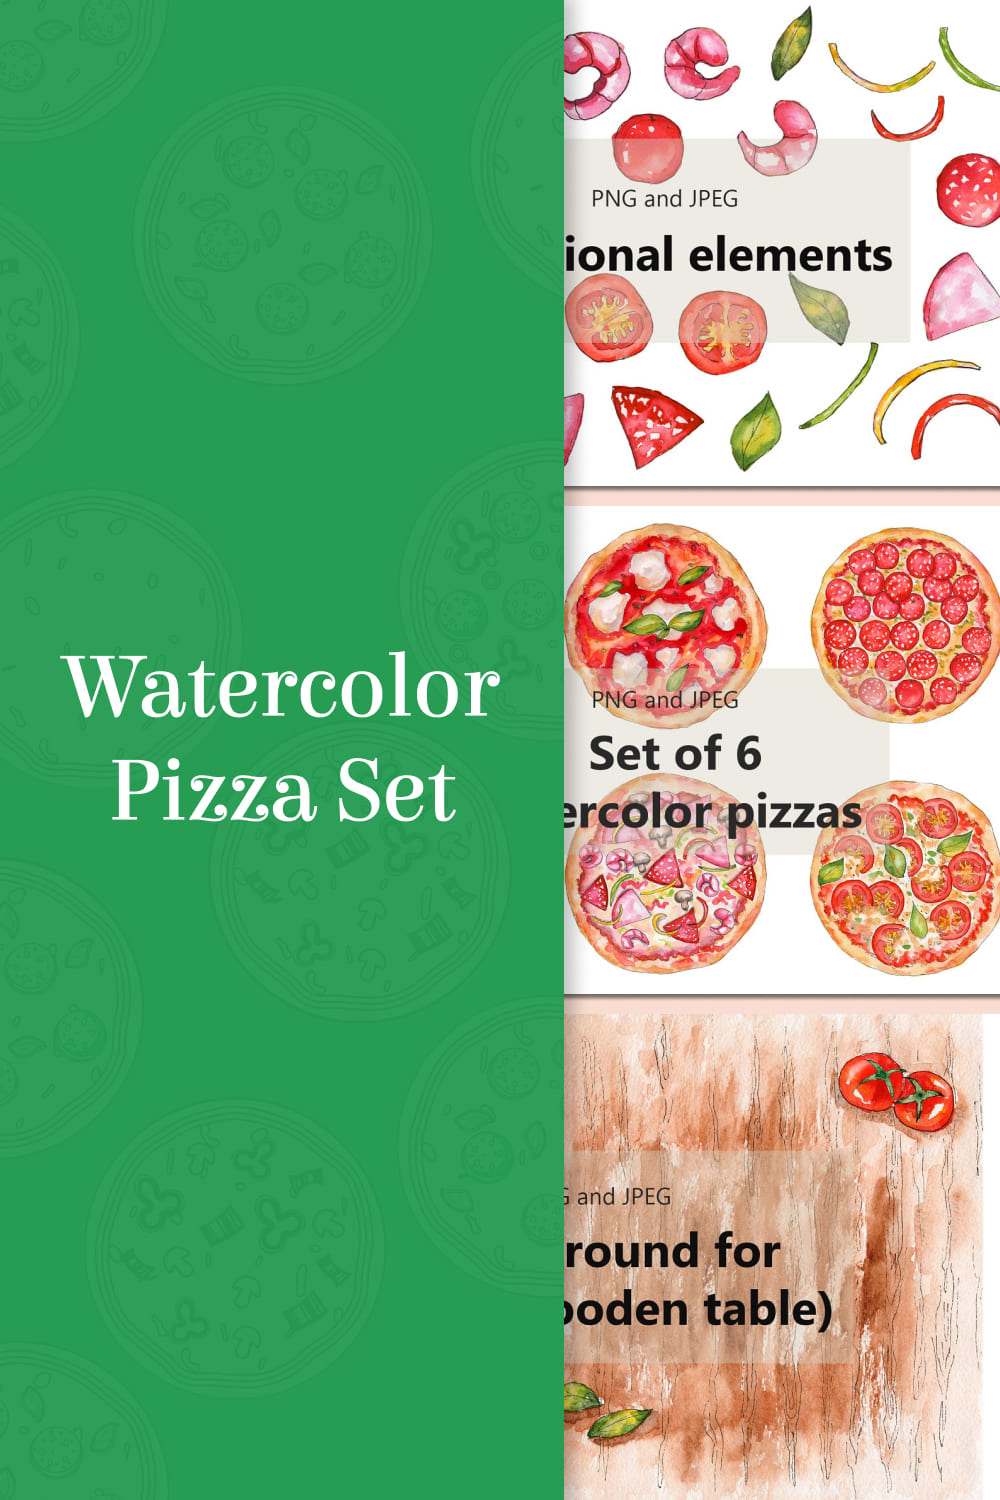 Watercolor pizza set - pinterest image preview.